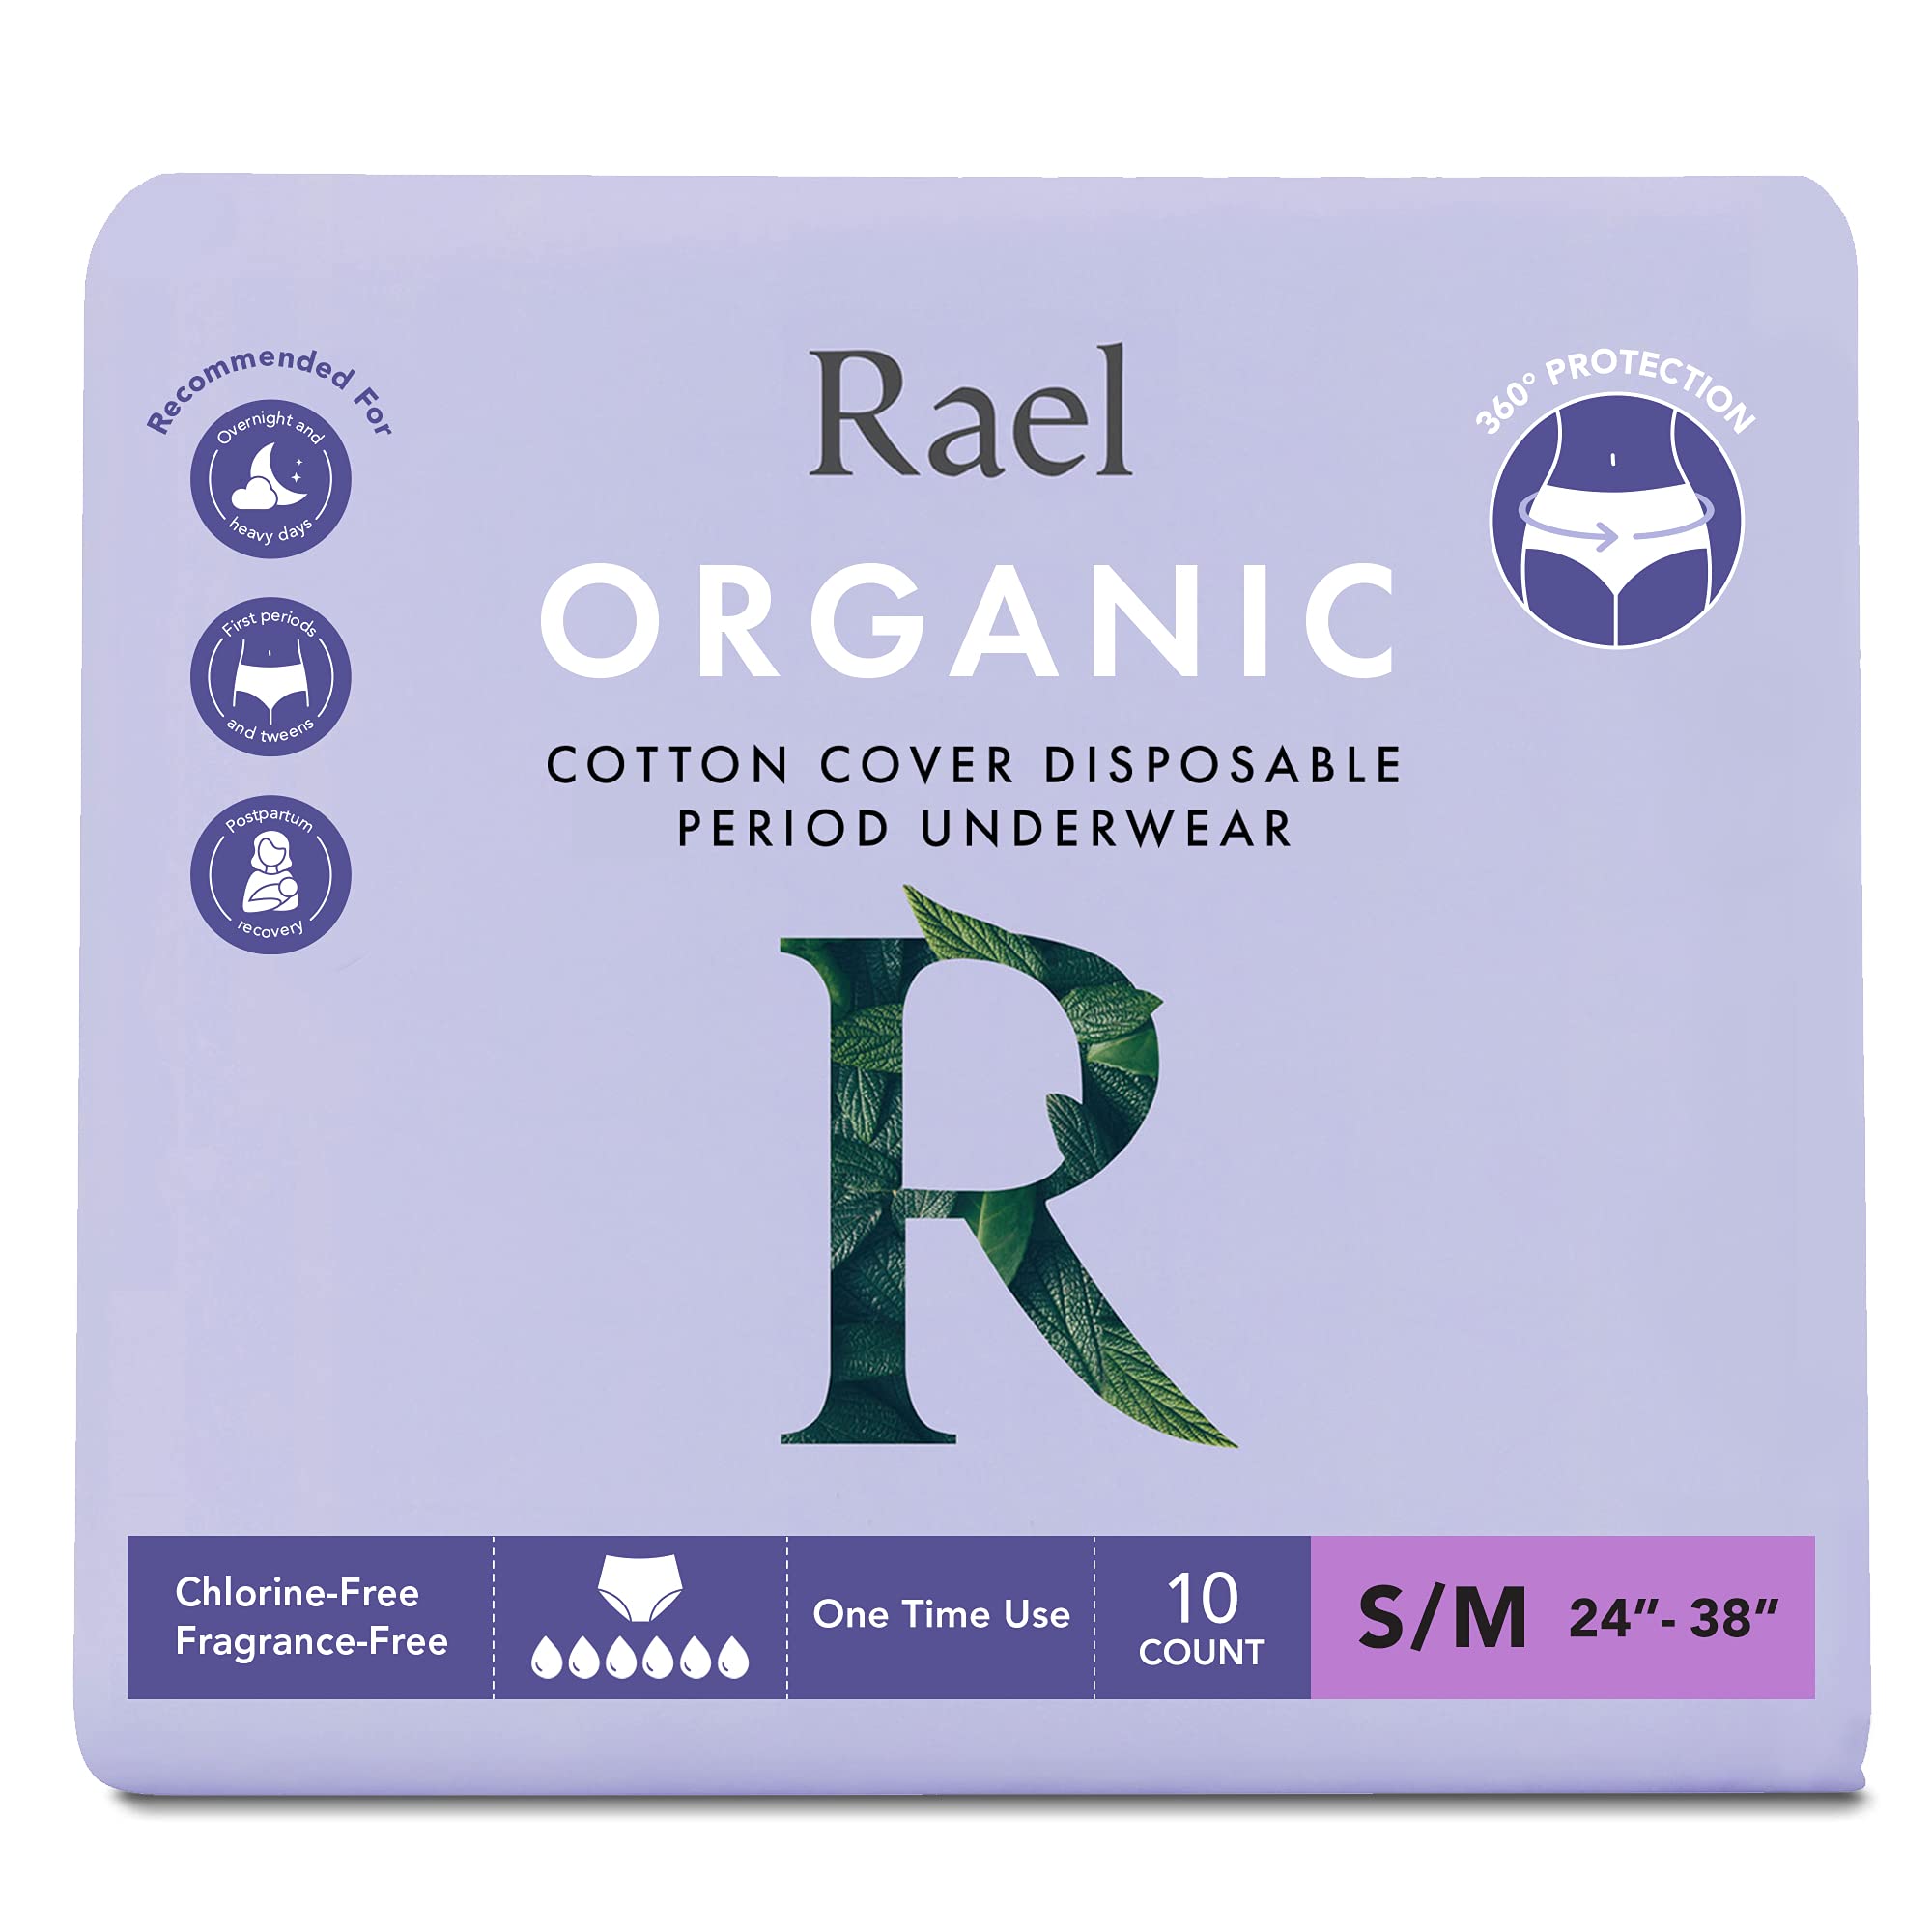 Rael Organic Cotton Cover Regular Menstrual Fragrance Free Pads